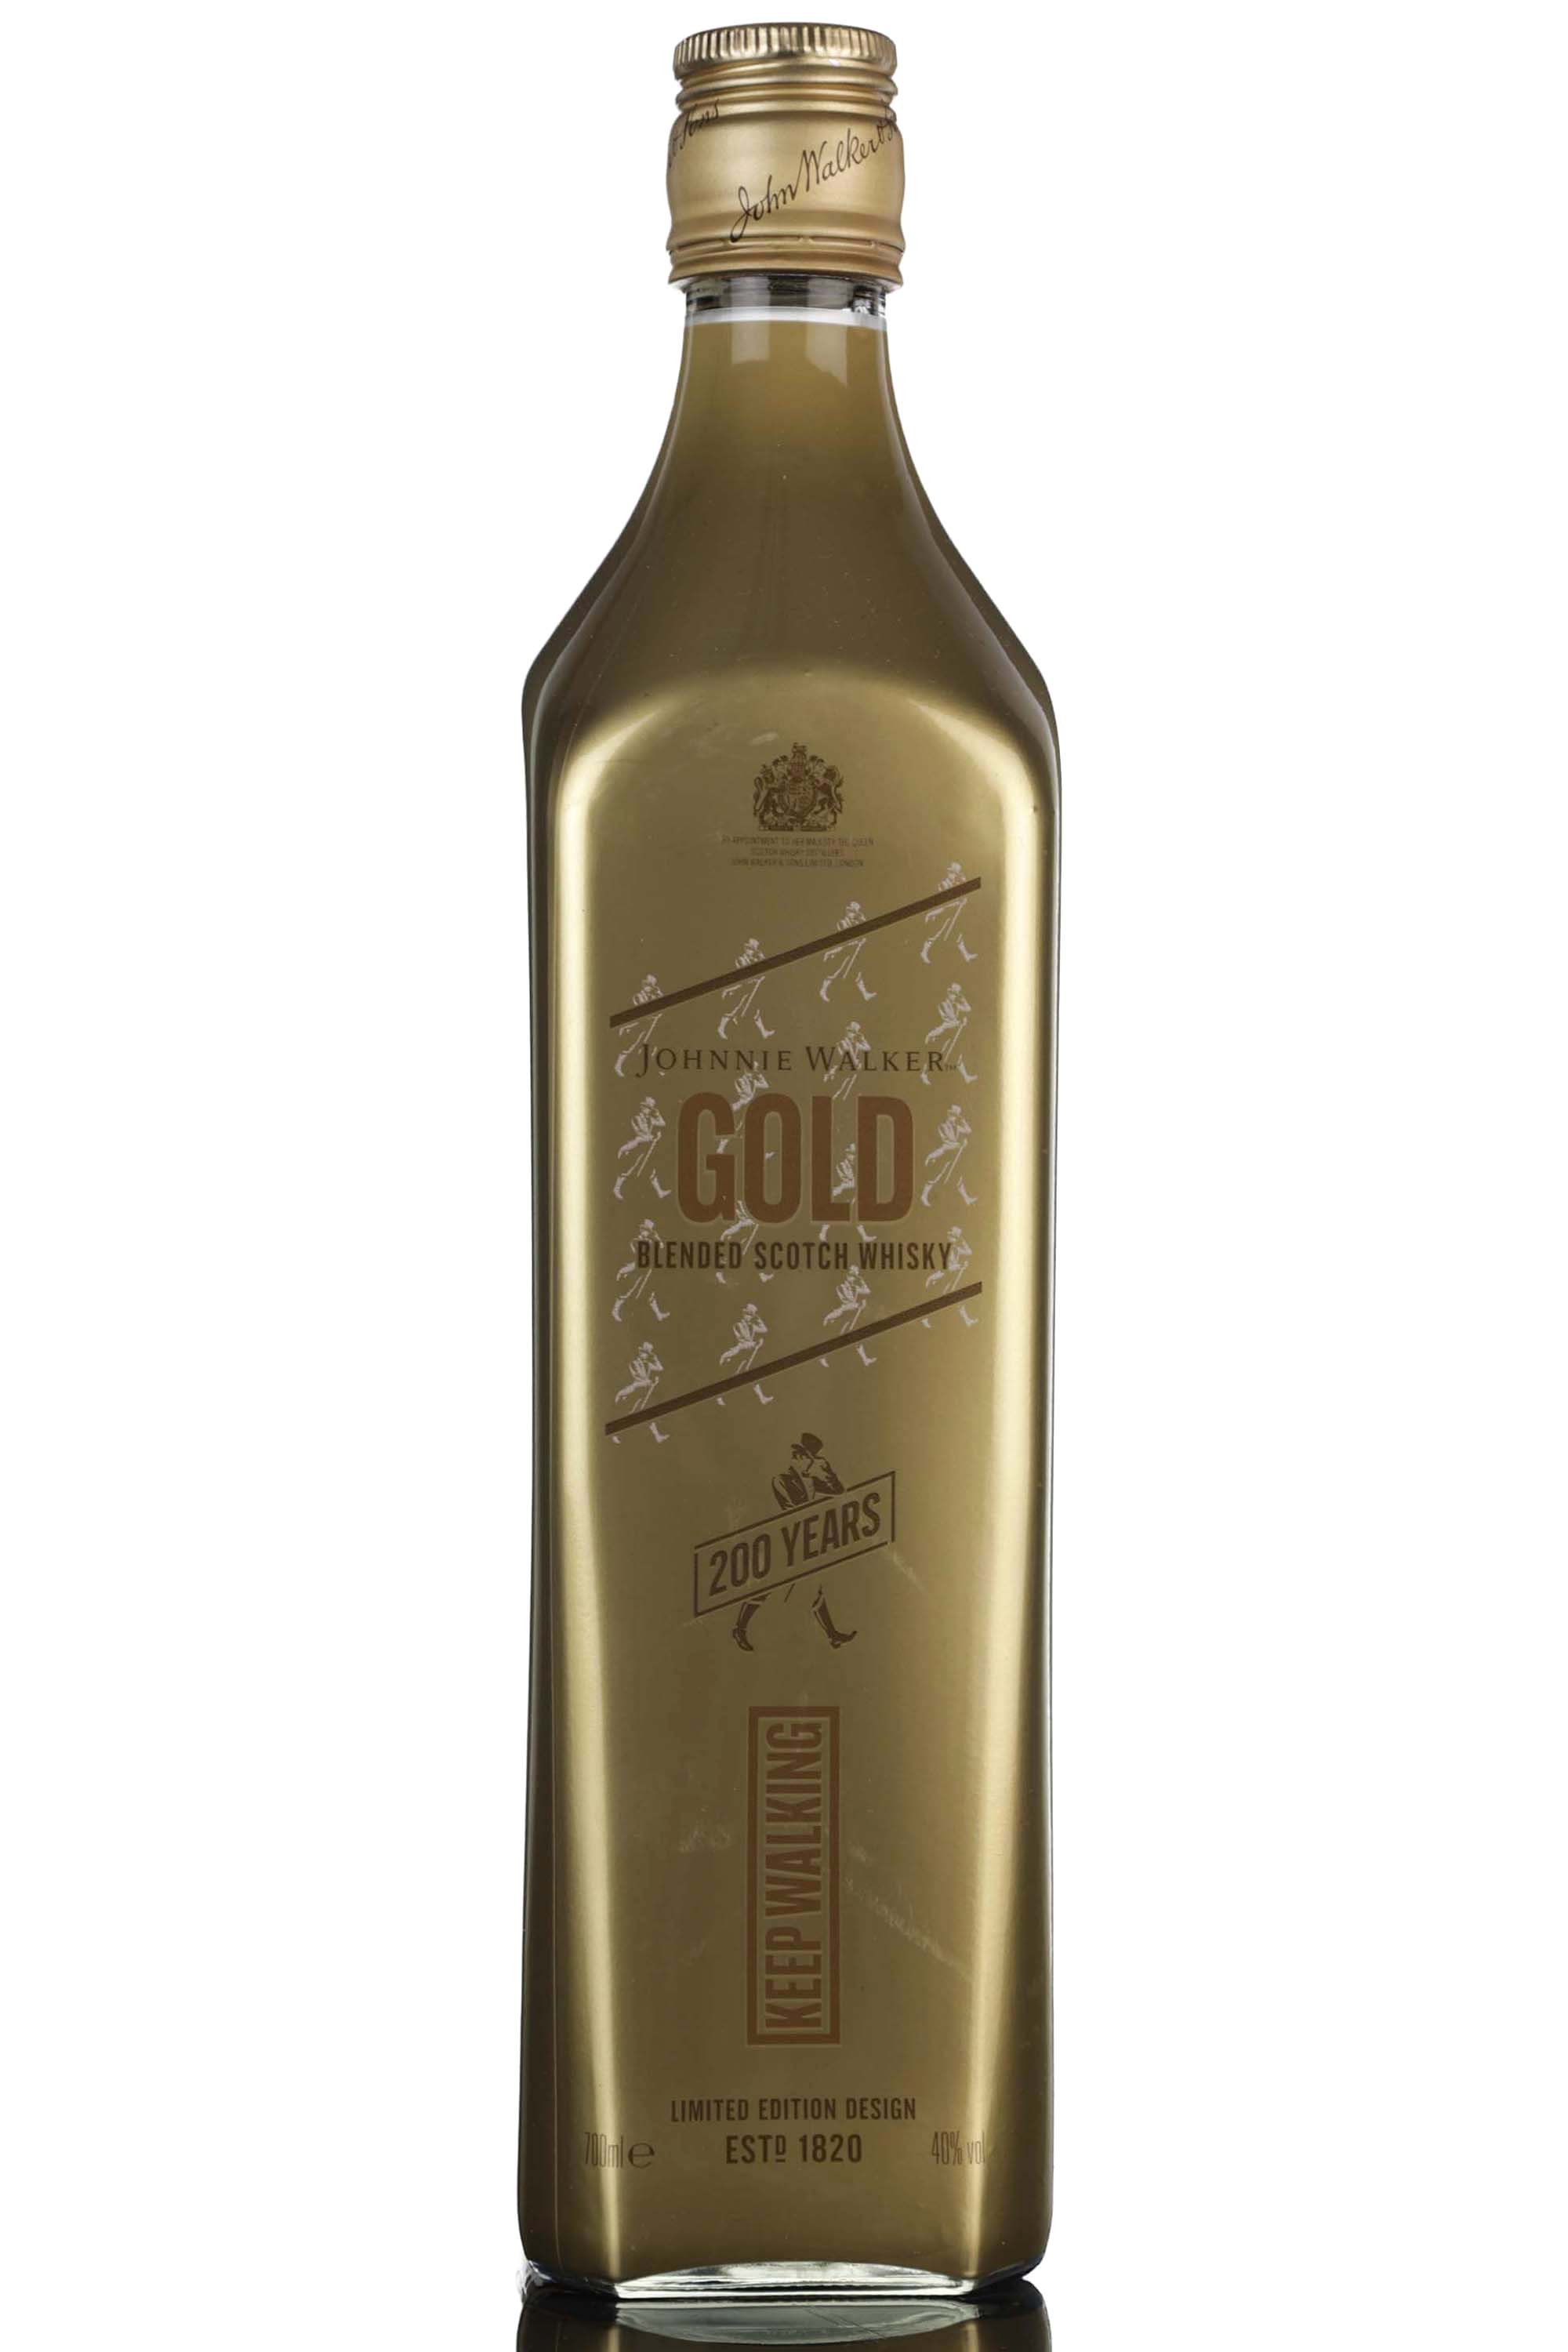 Johnnie Walker Gold - 200th Anniversary Limited Edition Design